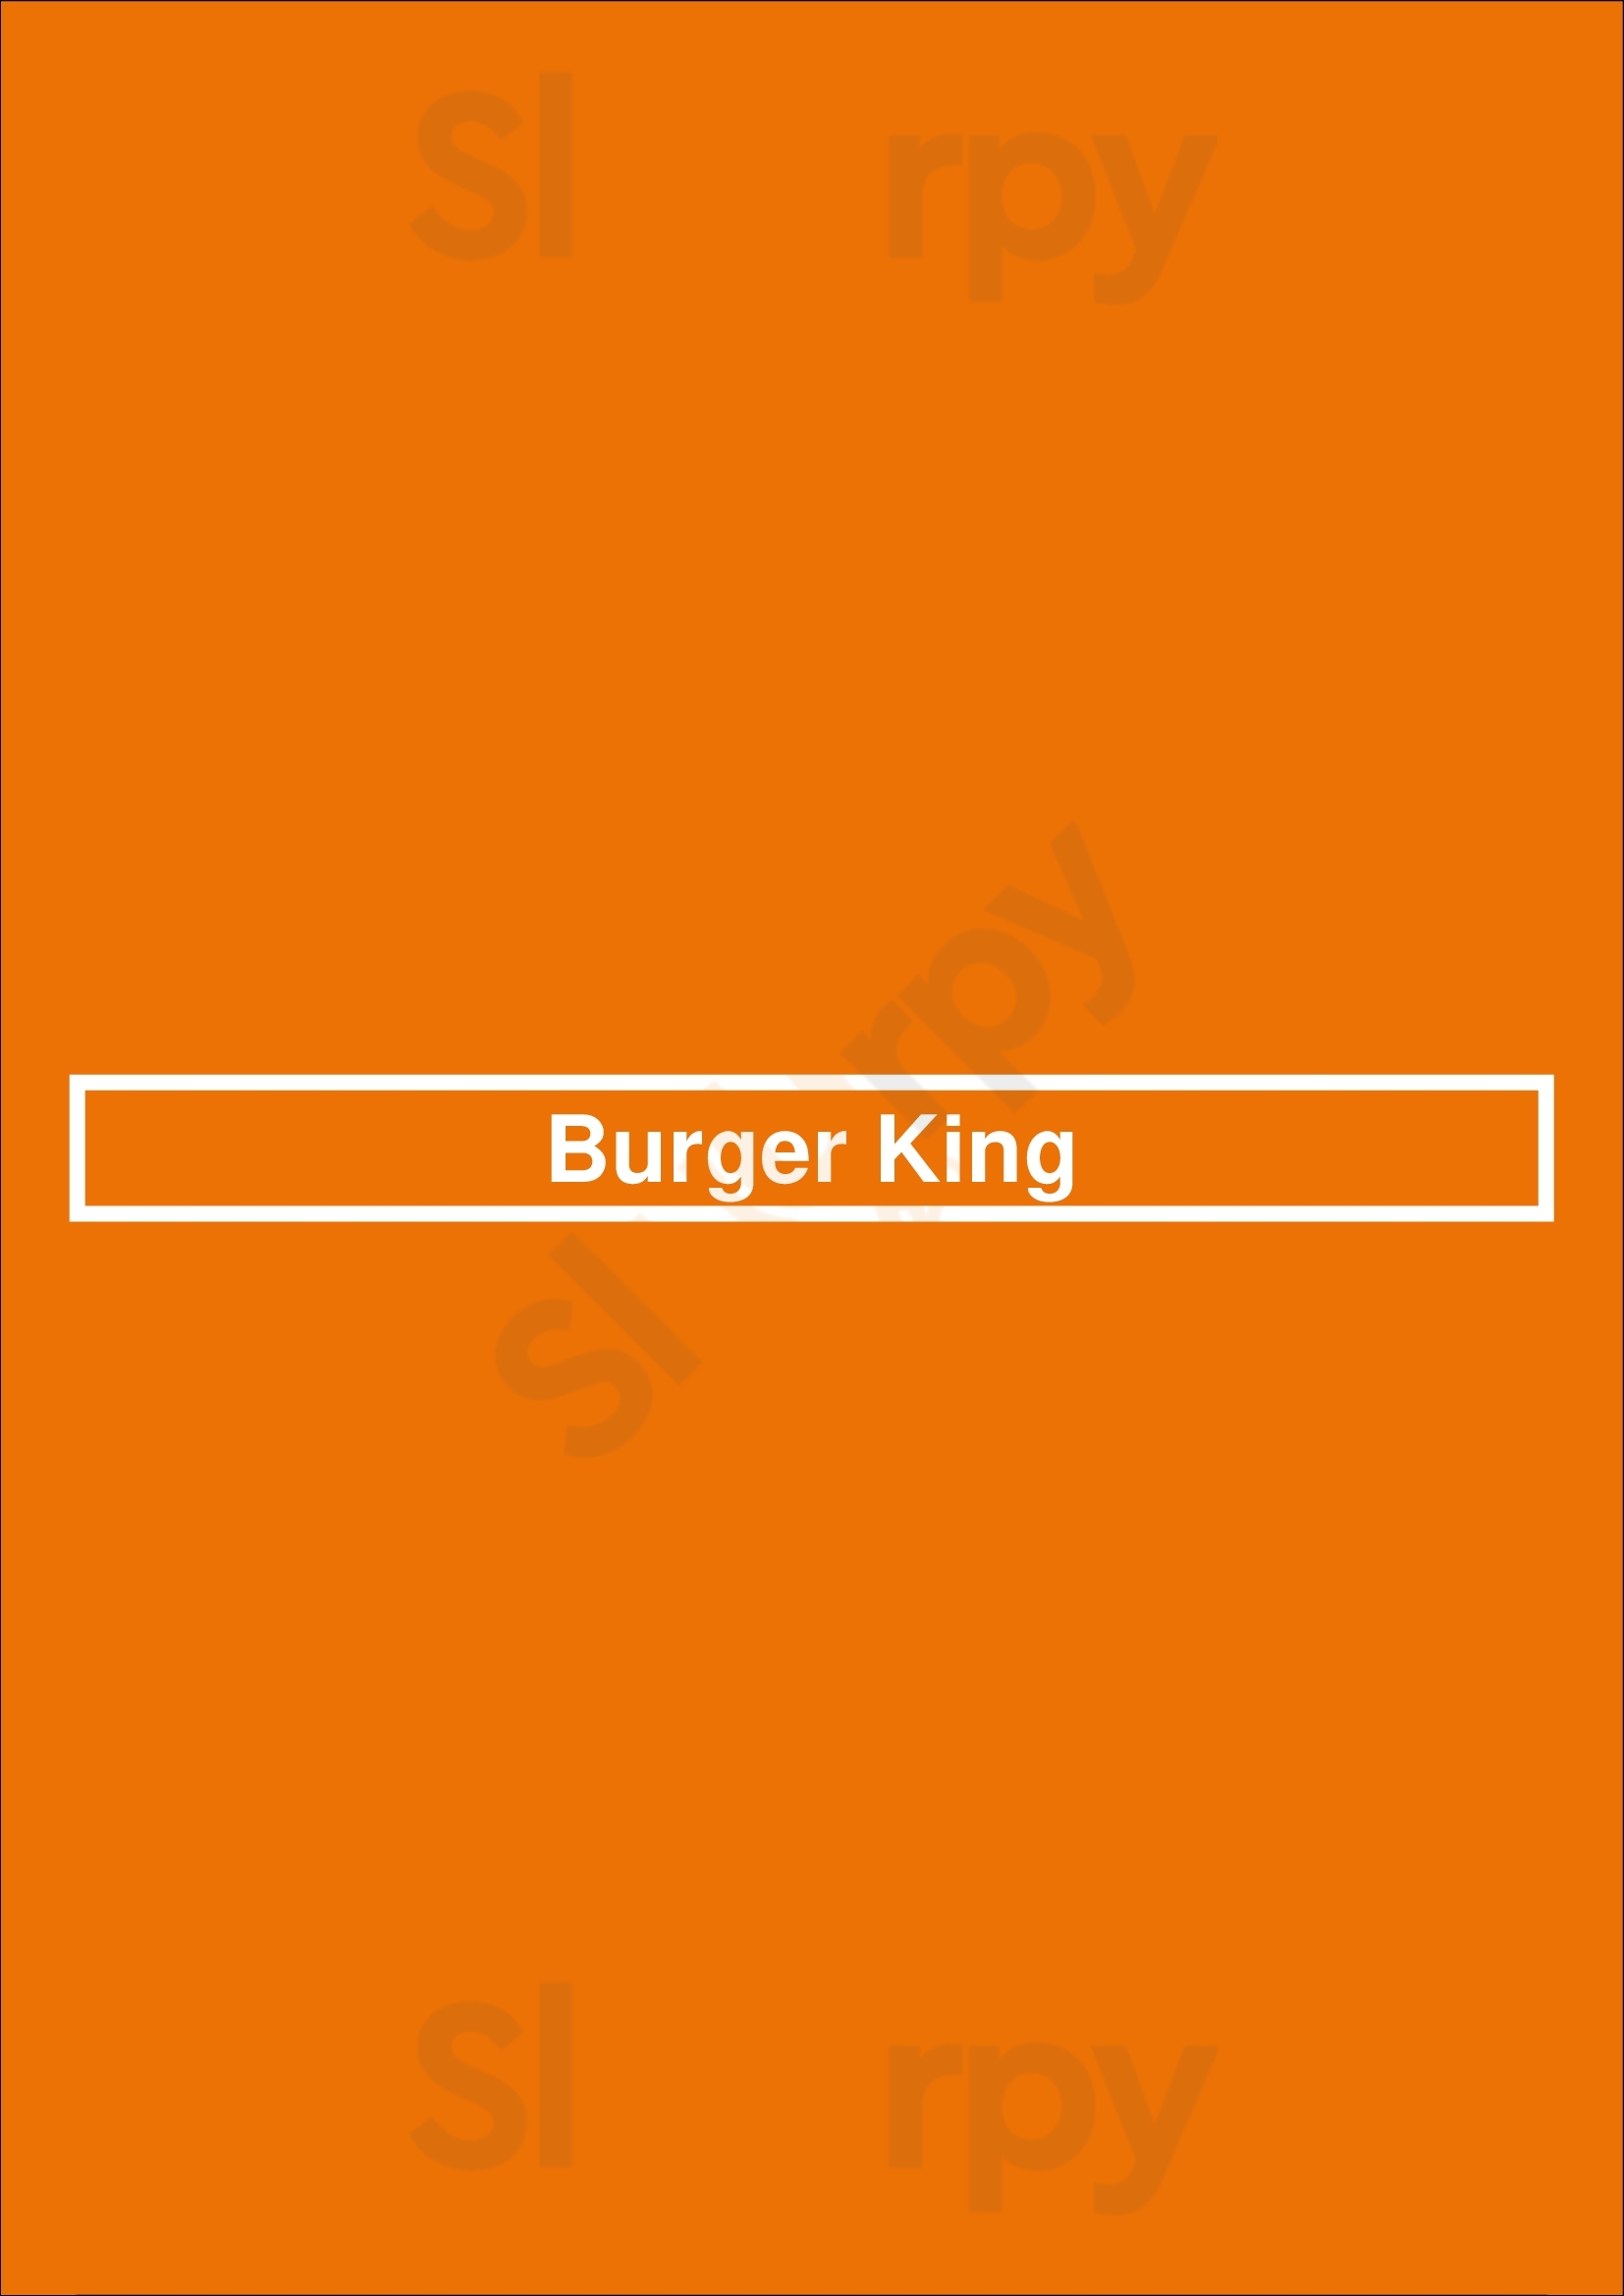 Burger King Salt Lake City Menu - 1